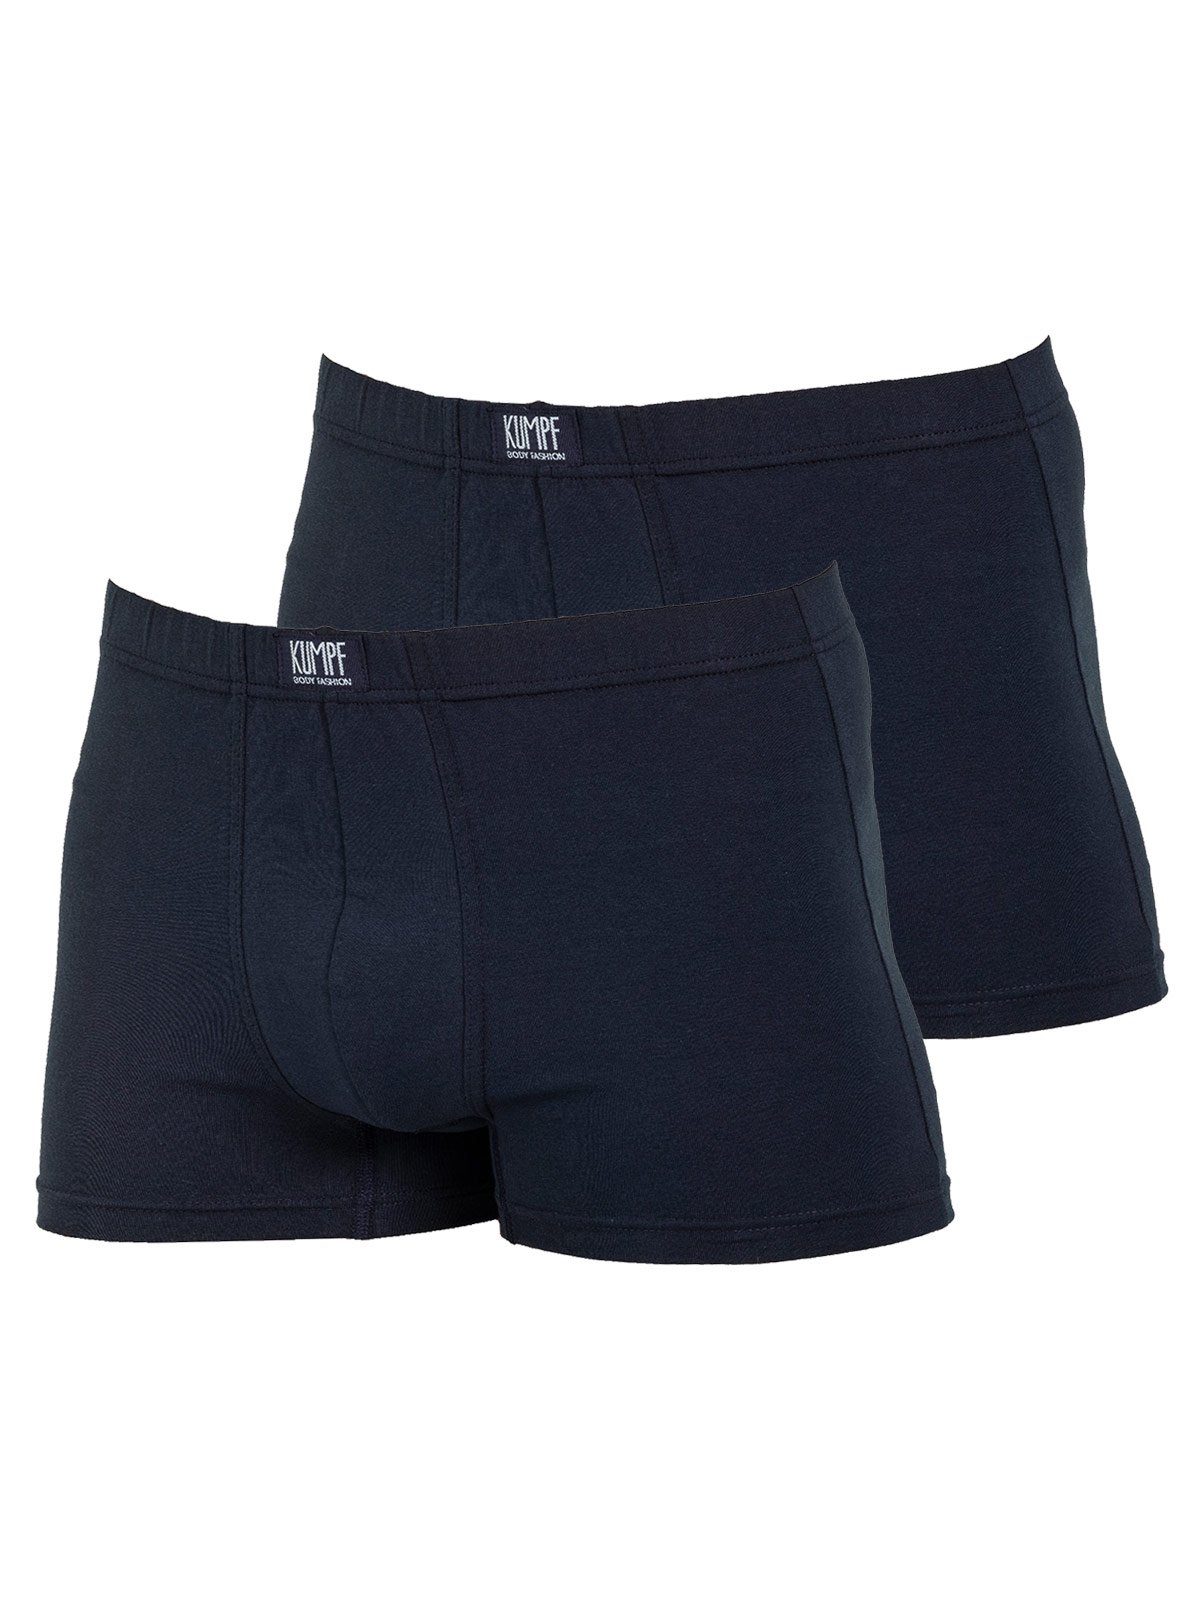 KUMPF Retro Pants 2er Sparpack Cotton Herren navy (Spar-Set, Markenqualität Bio 2-St) Pants hohe